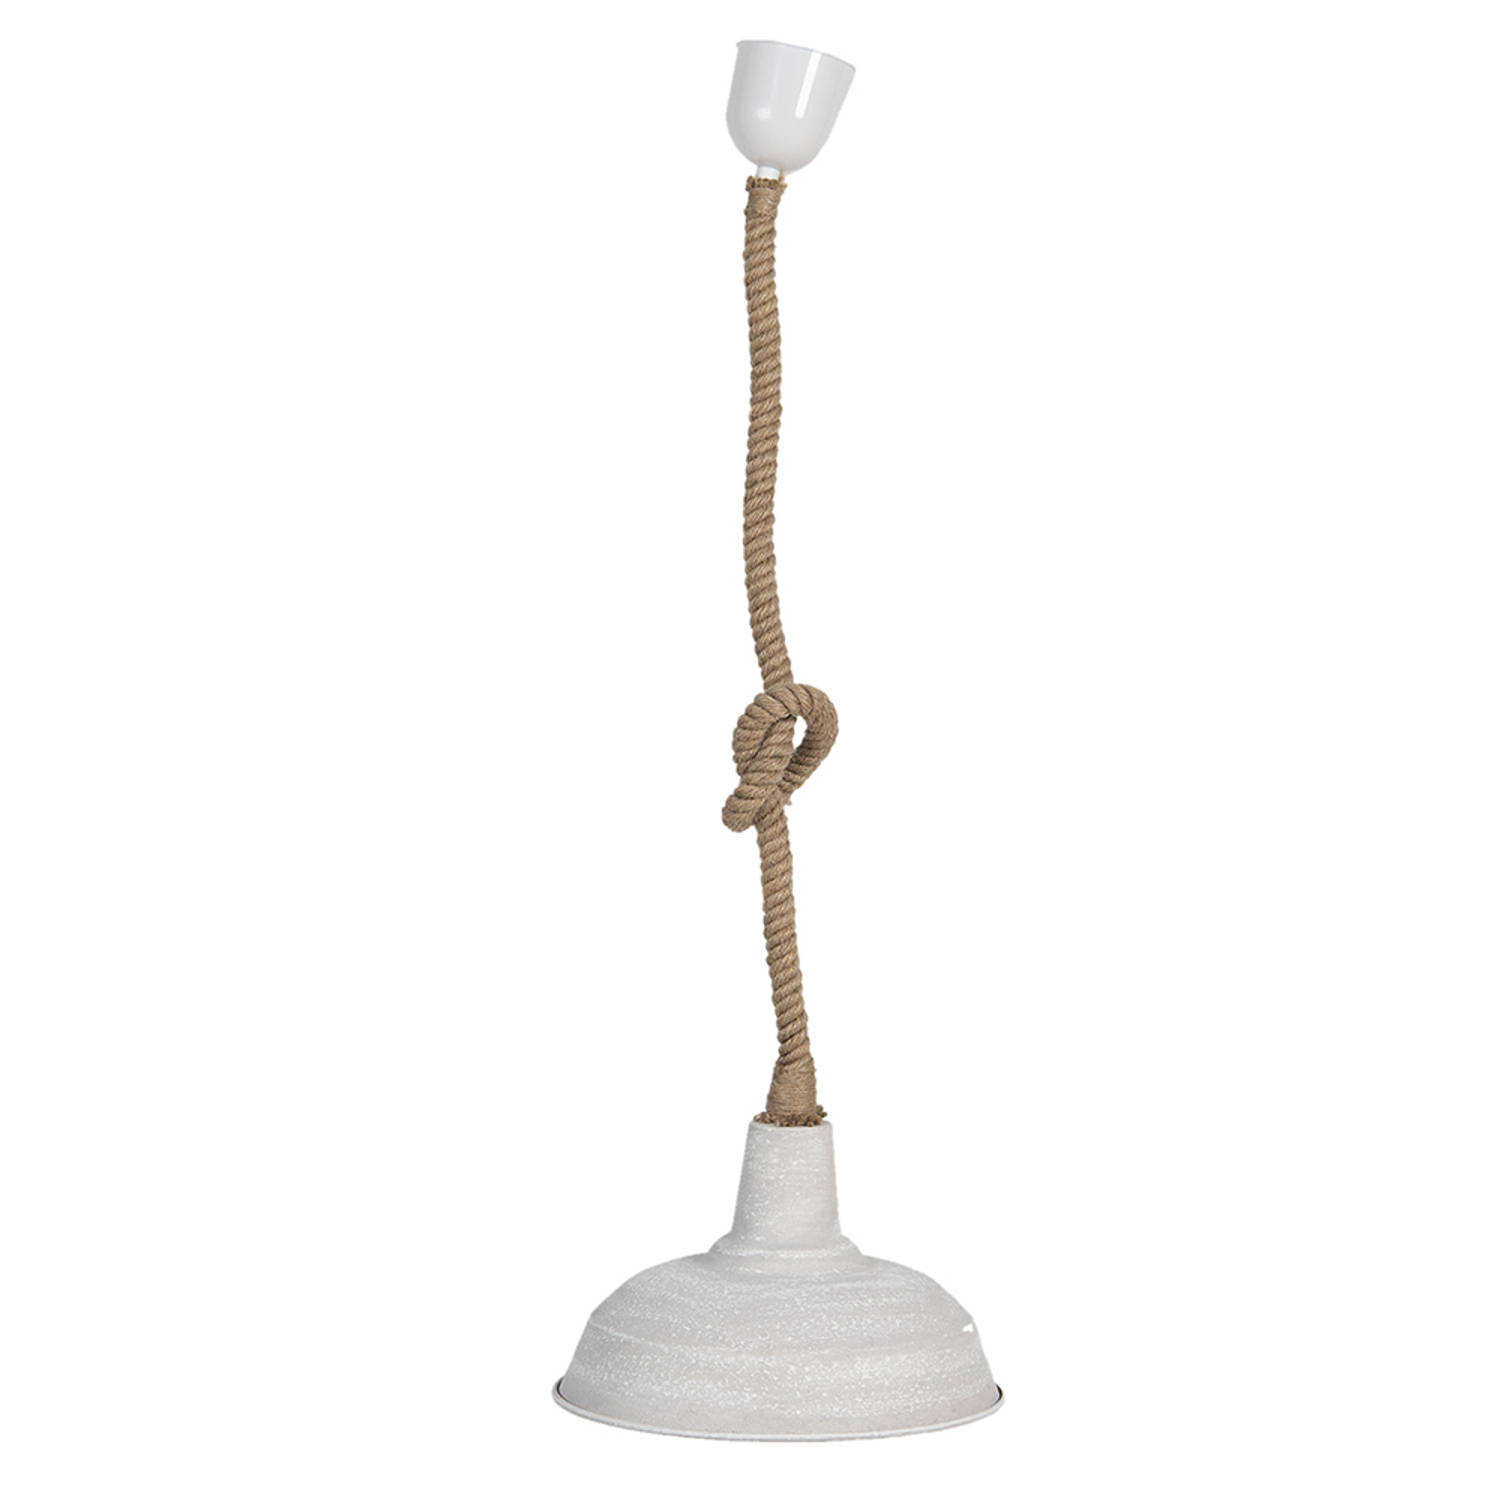 HAES DECO - Hanglamp - Industrial - Witte Vintage / Retro Lamp, Ø 25x16 cm - Ronde Hanglamp Eettafel, Hanglamp Eetkamer